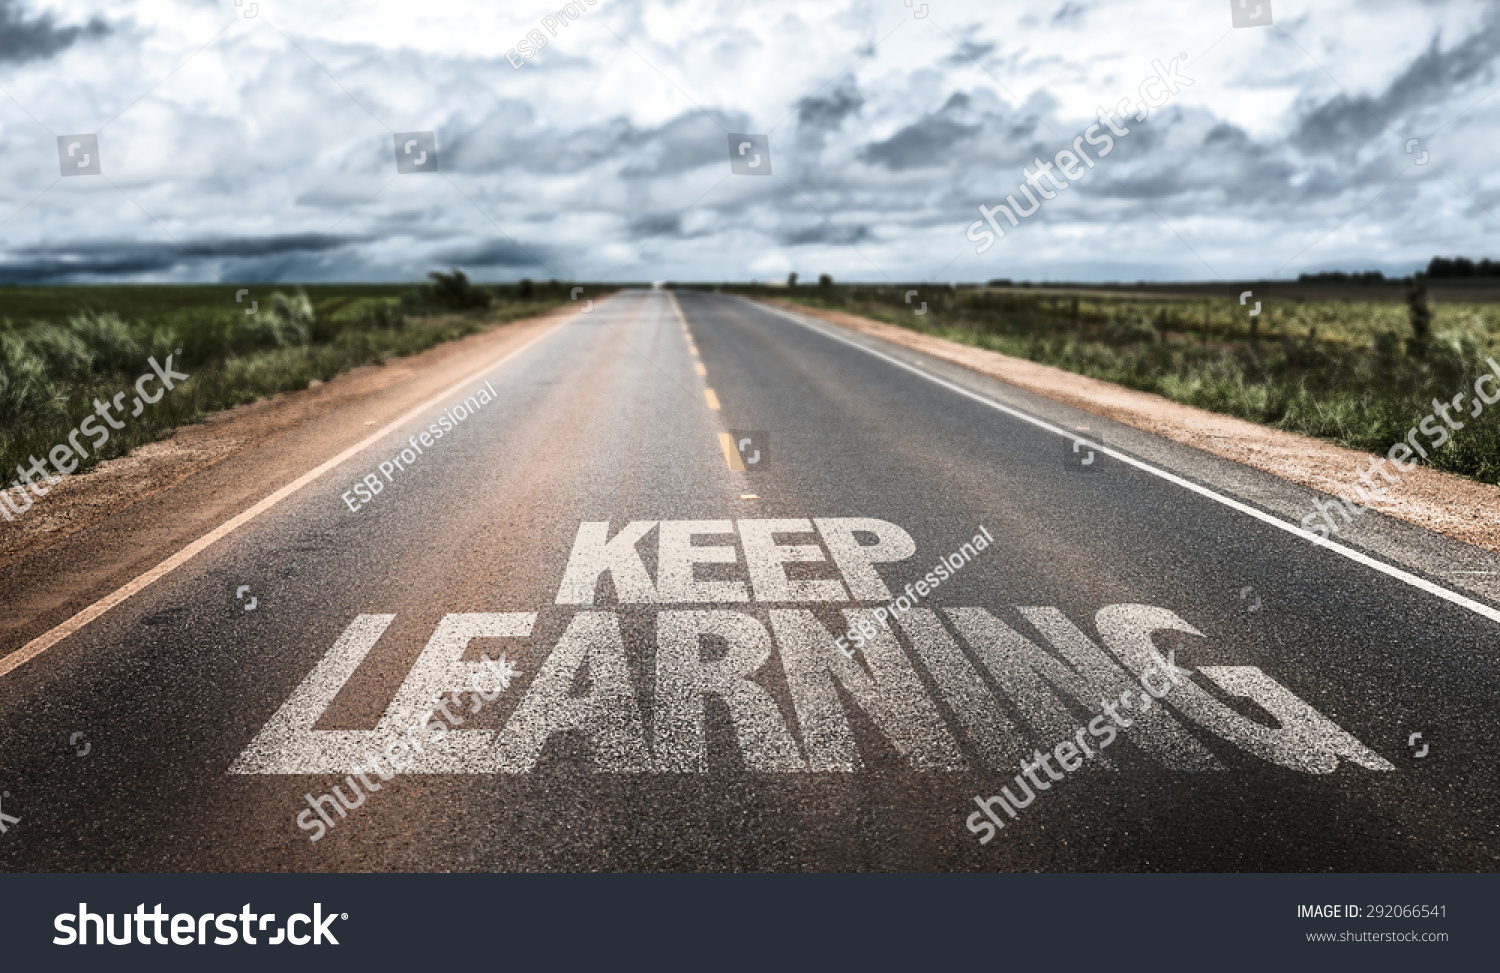 Keep Learning written on rural road #292066541